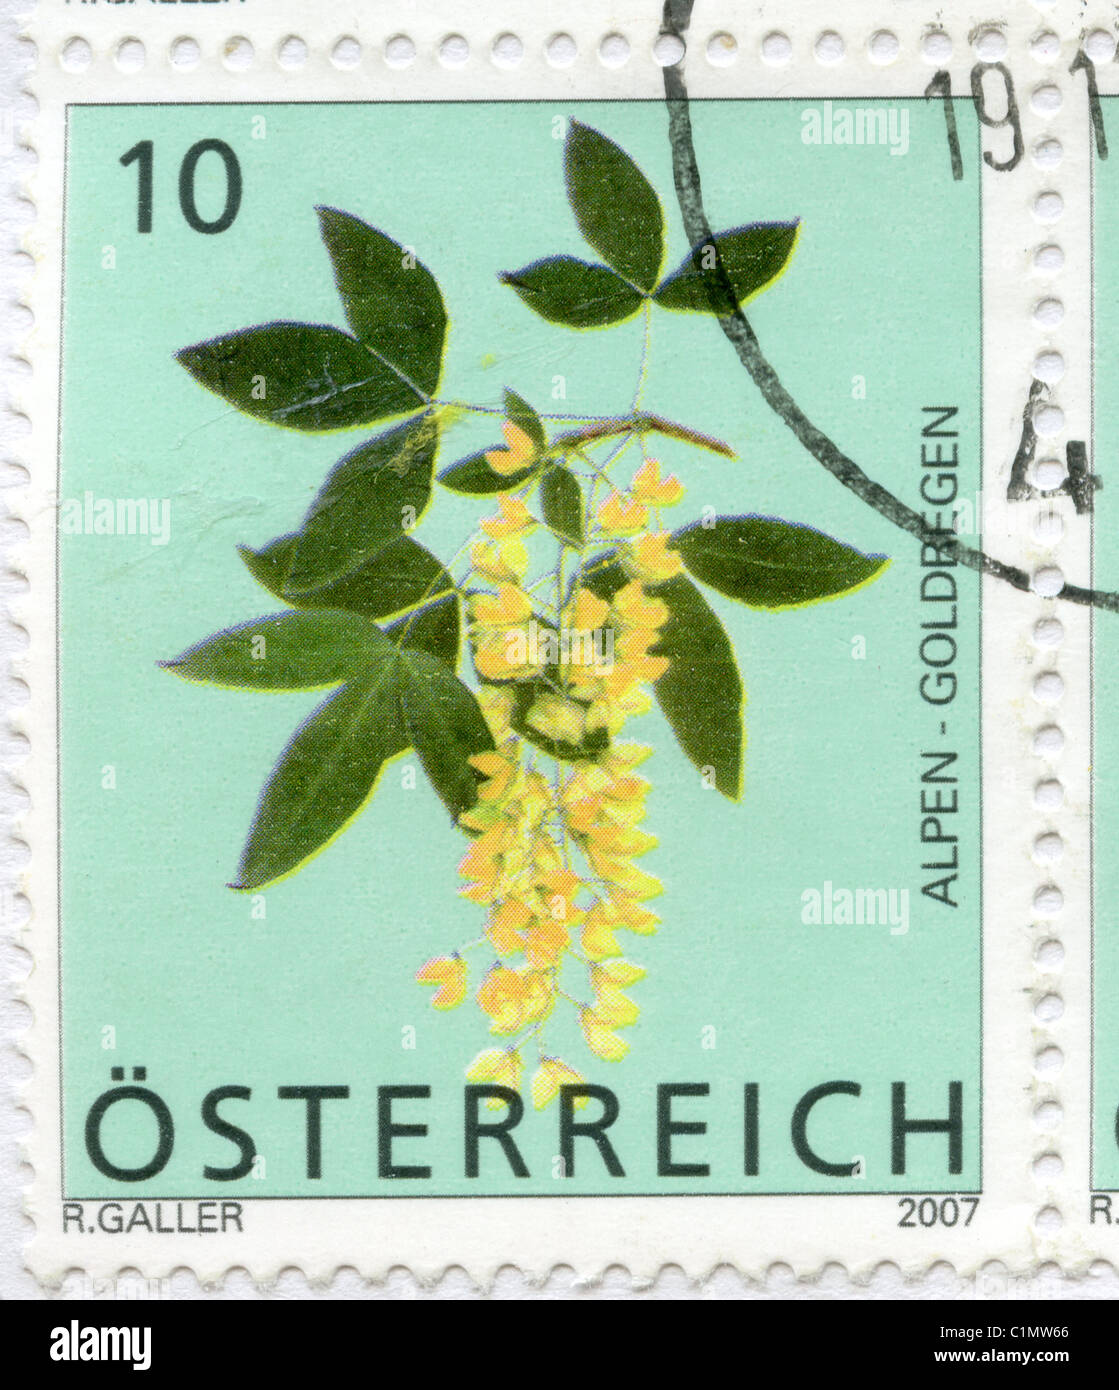 Austria postage stamp Stock Photo